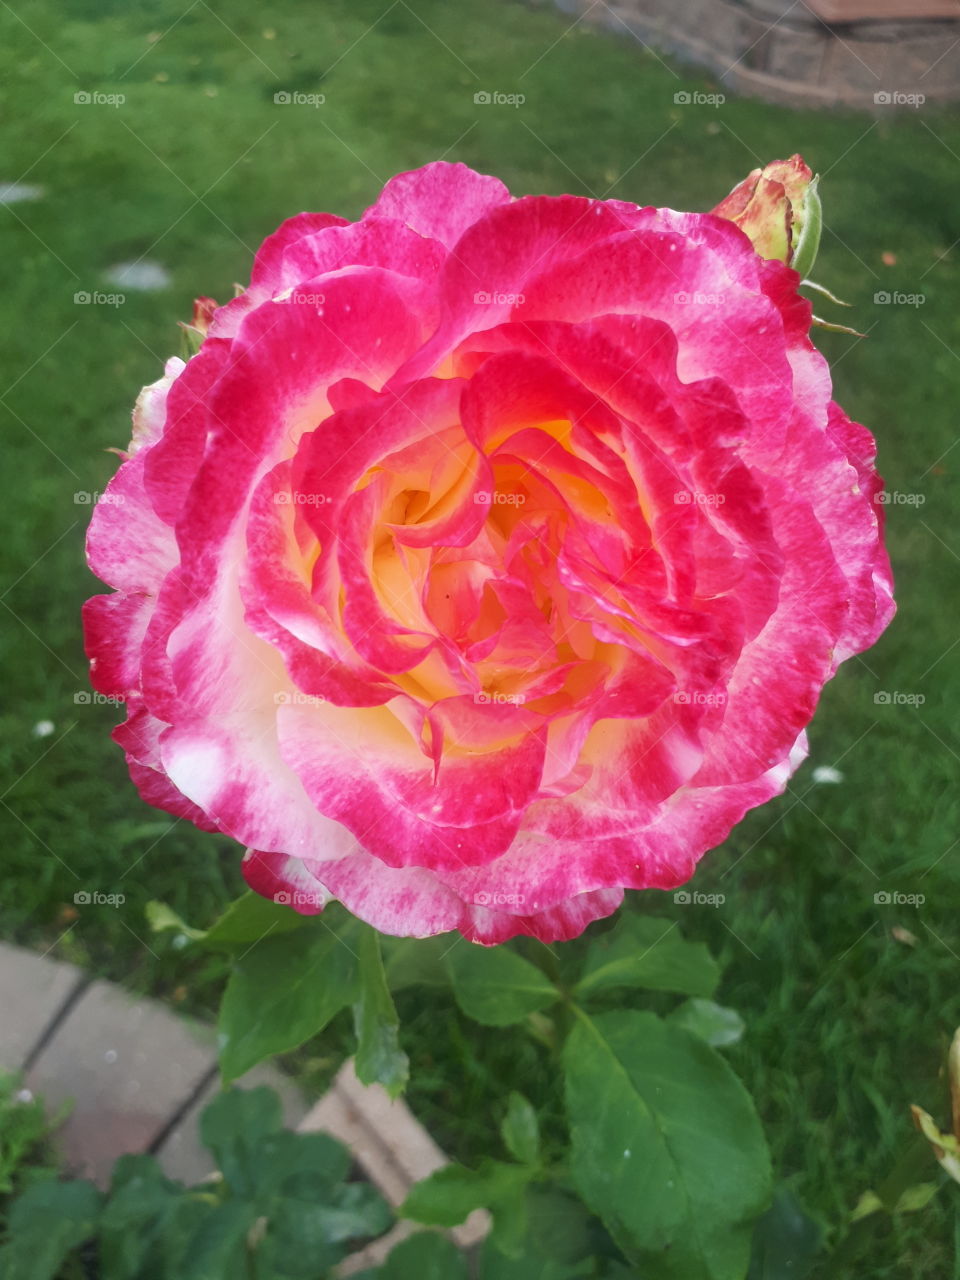 Sofia's Rose has blossomed beautifully.